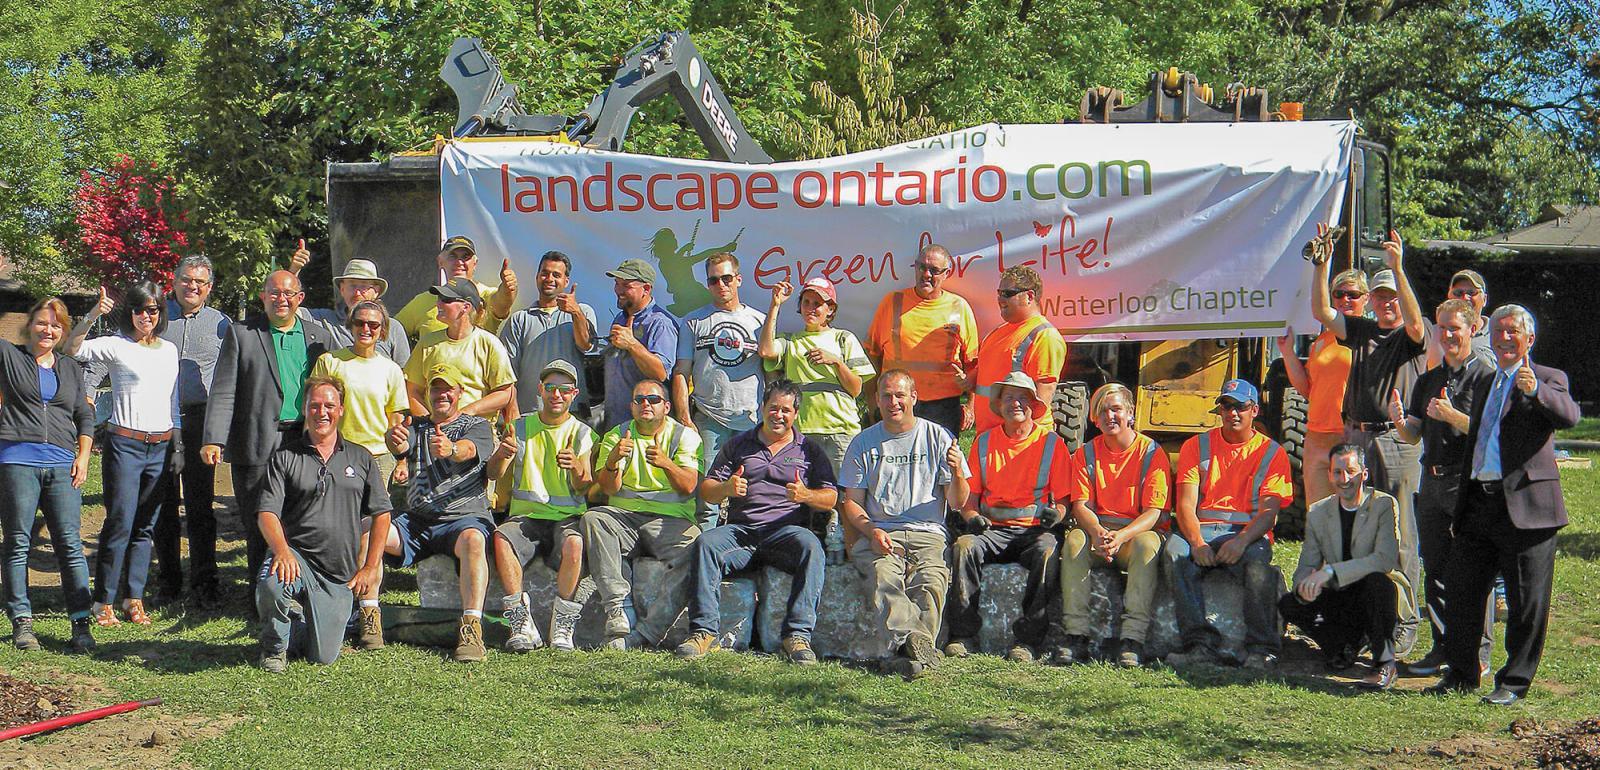 Over 45 Landscape Ontario volunteers helped to complete this year’s school greening project in Waterloo Chapter. 